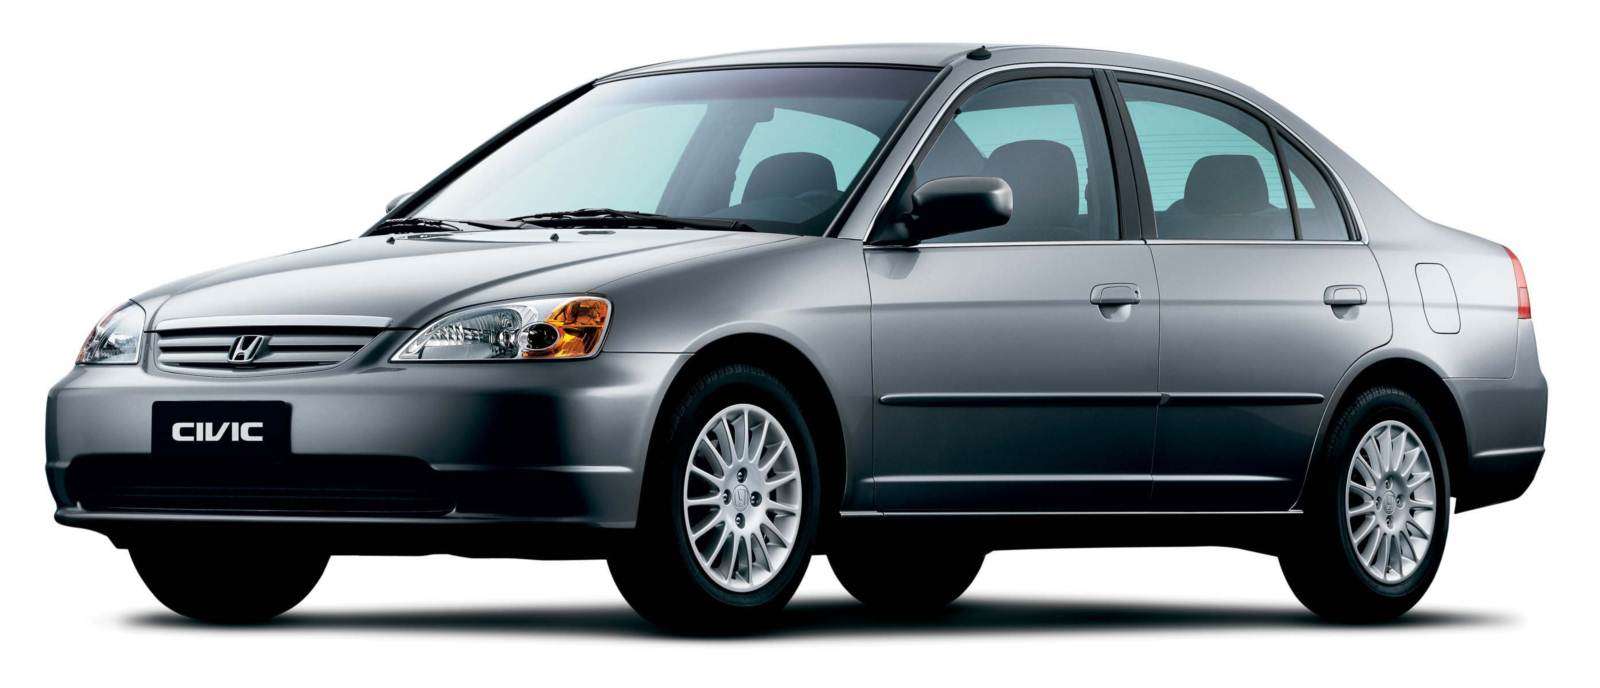 Honda civic recalls airbags #7